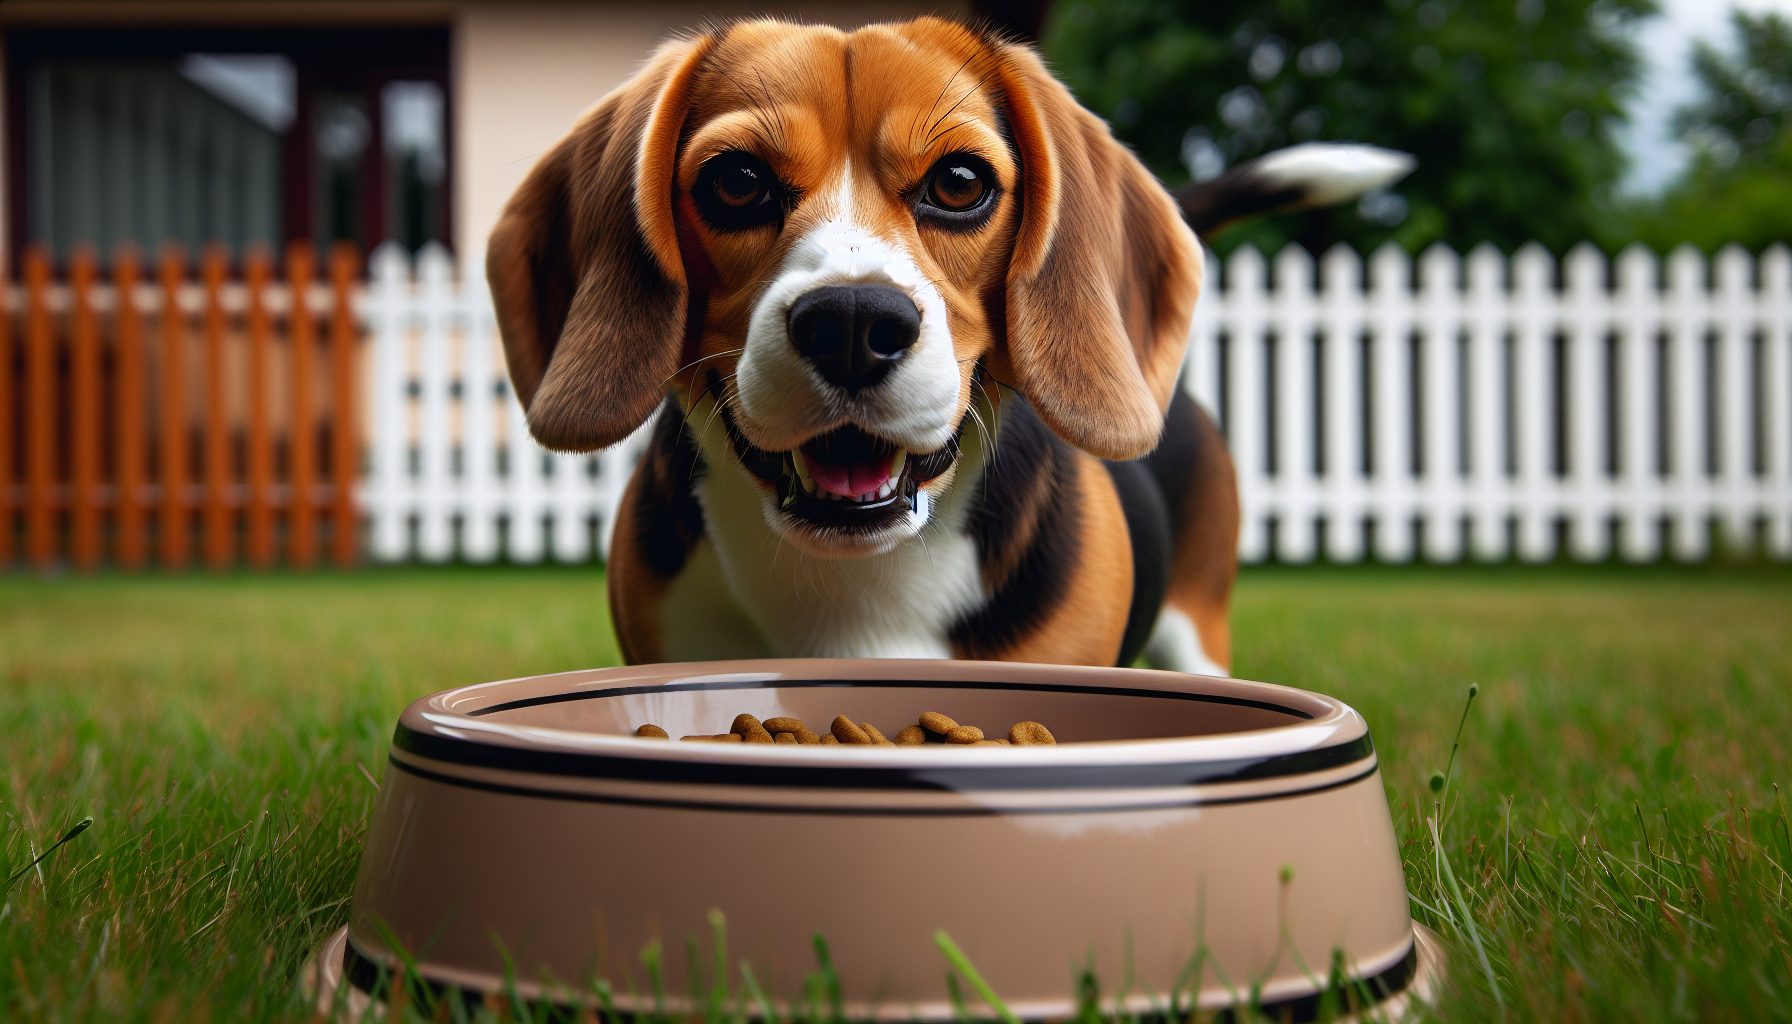 Beagle showing territorial behavior